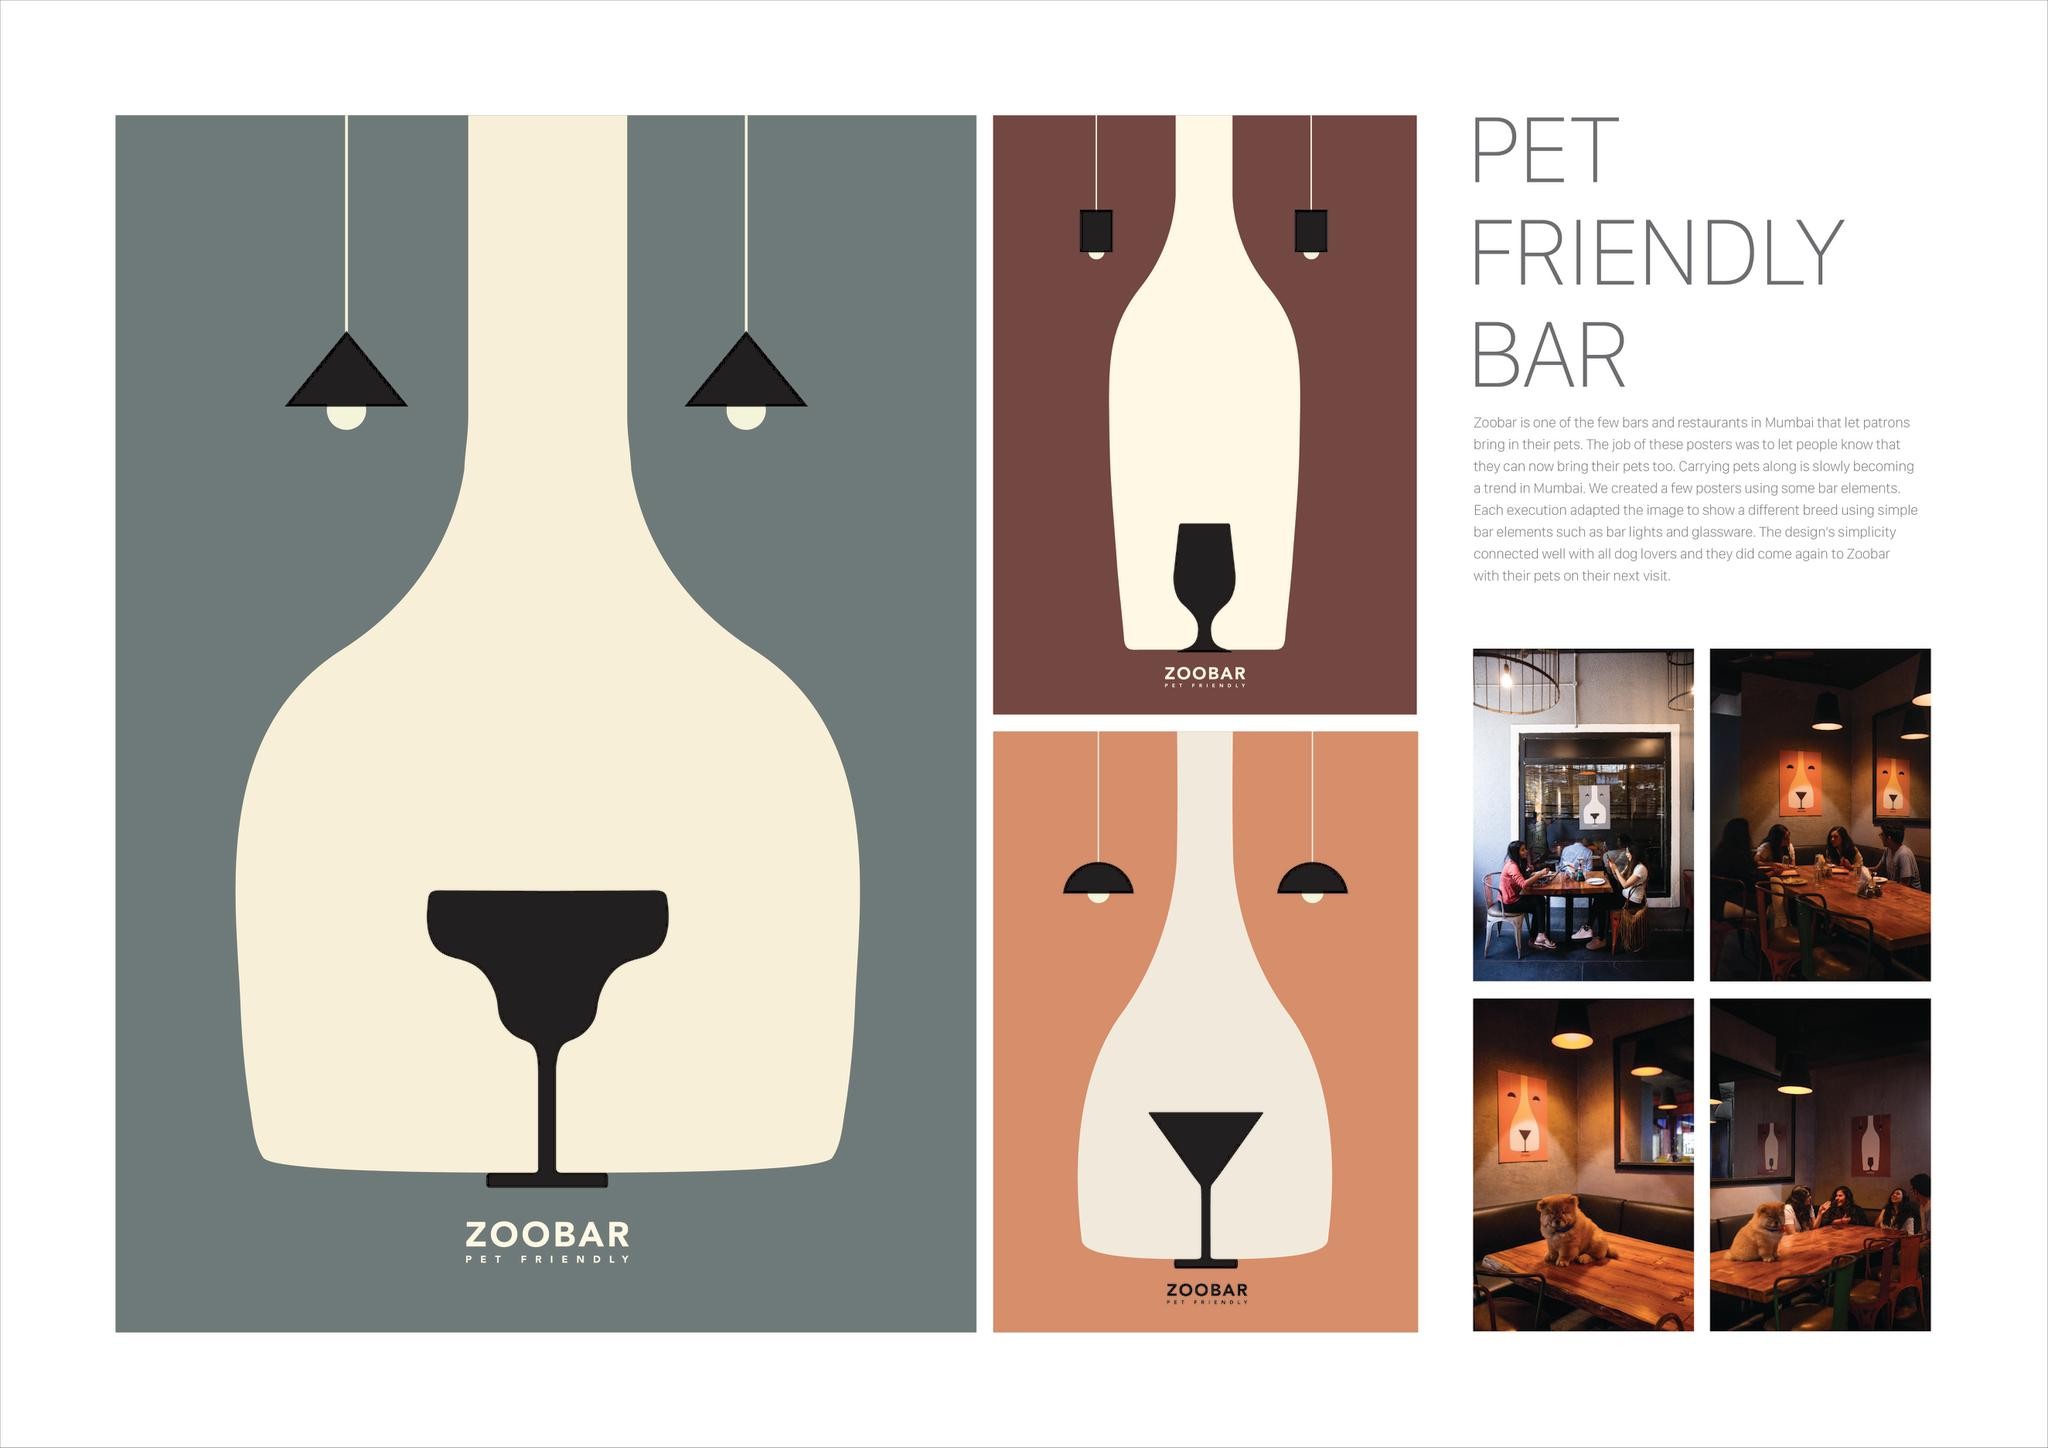 Pet Friendly Bar - Basset Hound